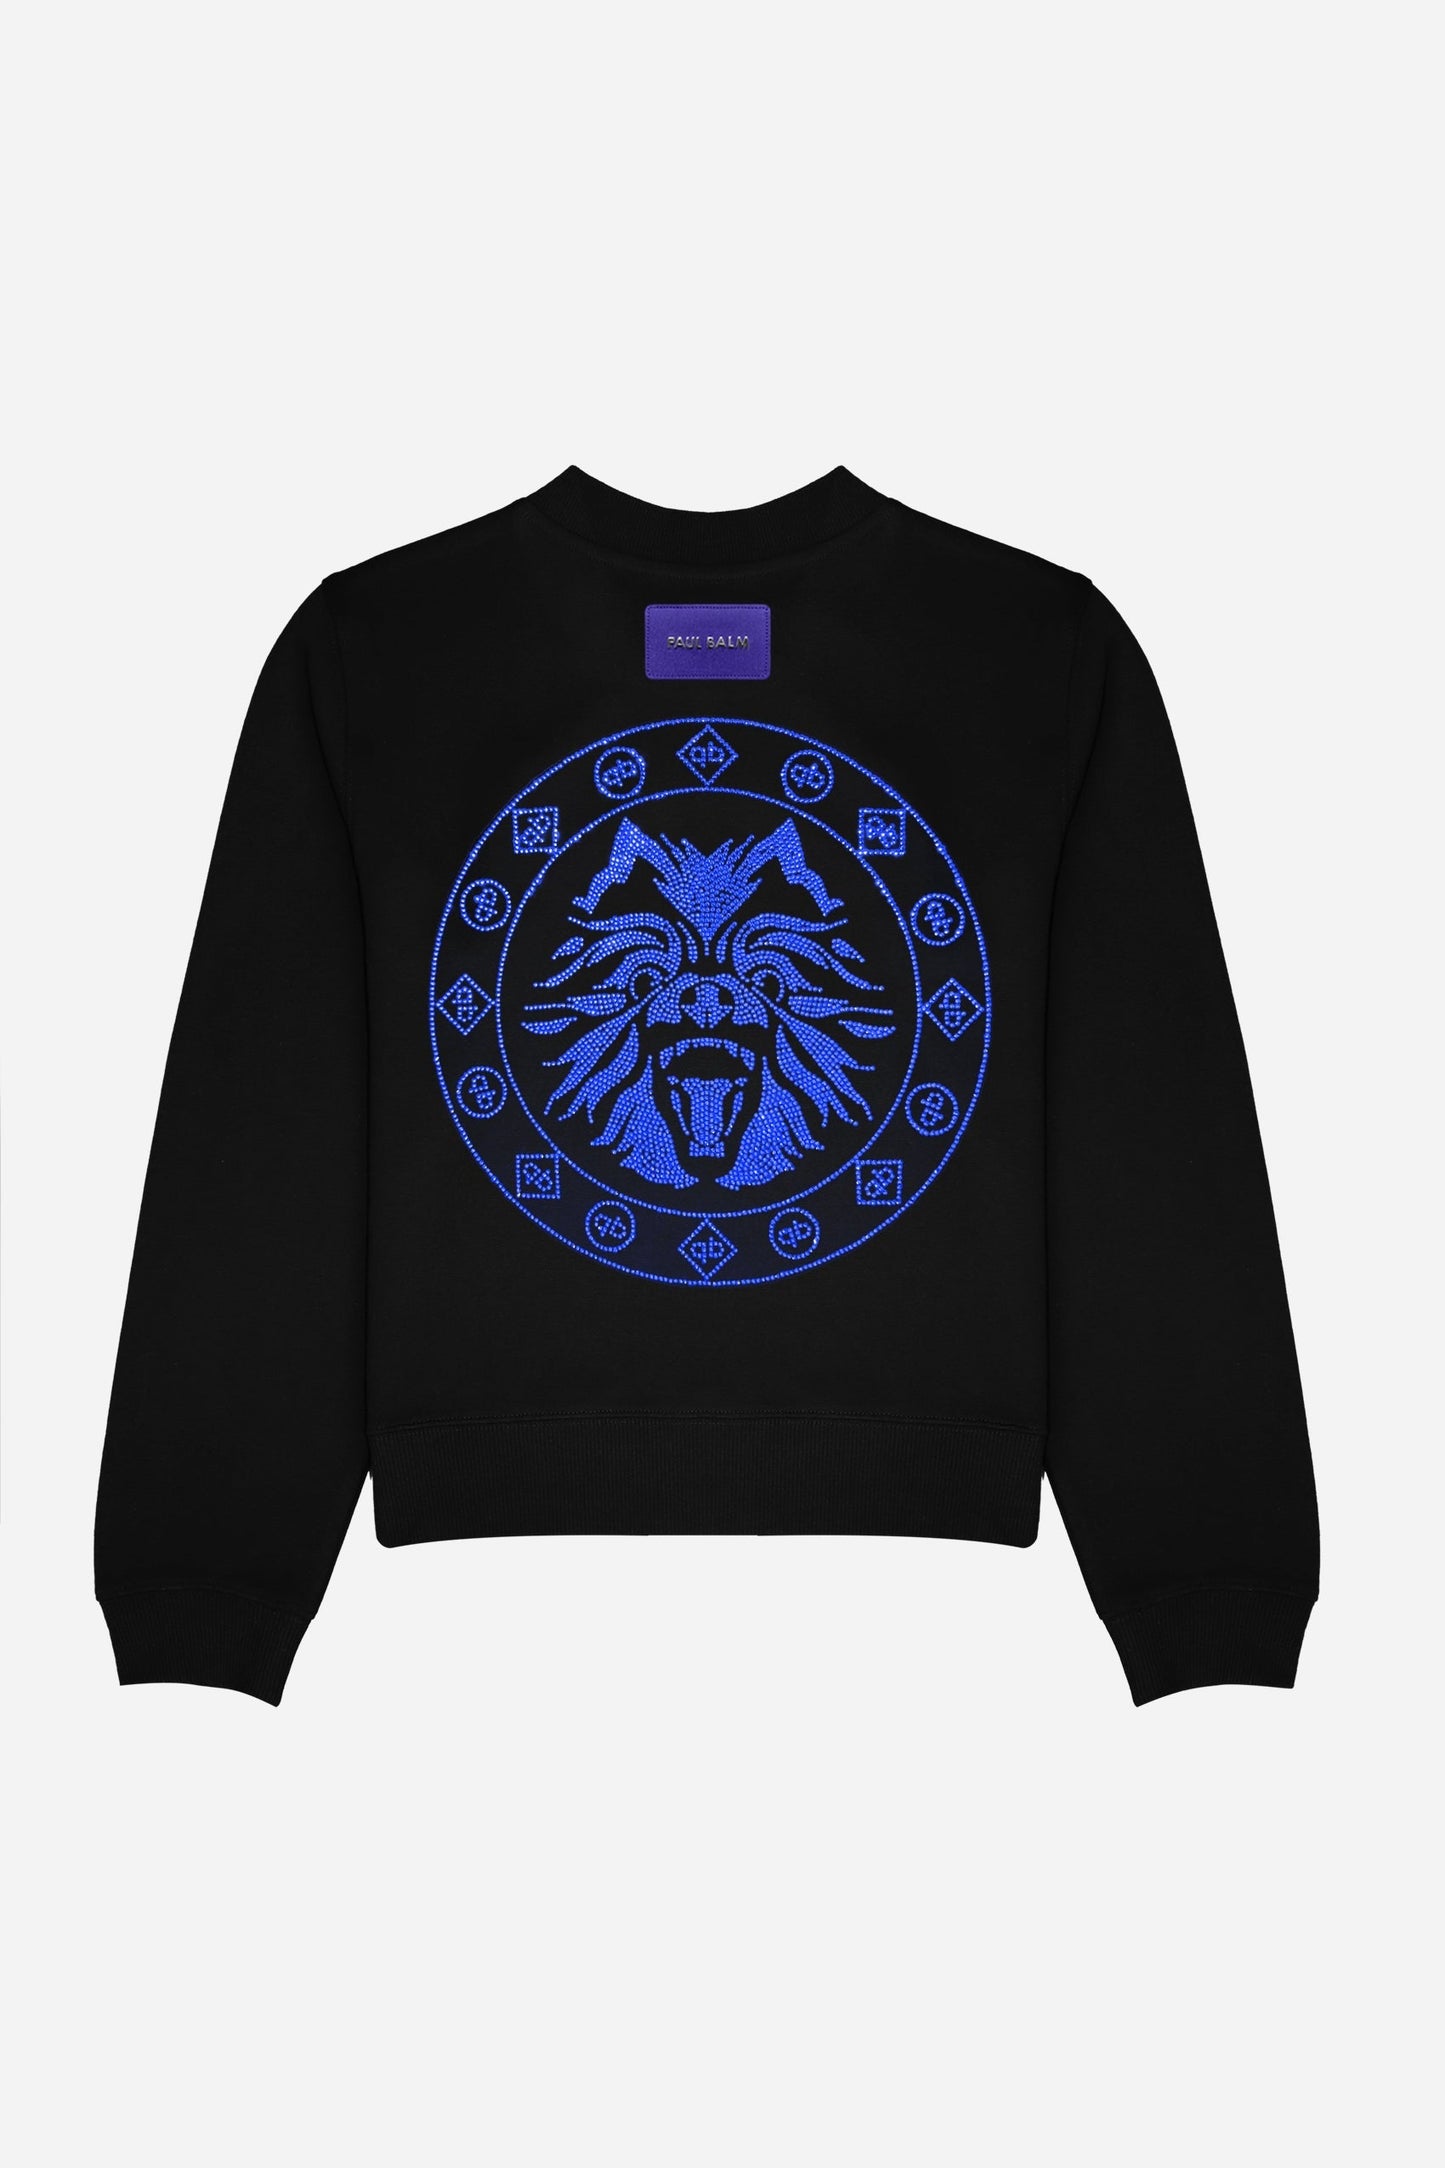 PAUL BALM Embroidery blue Sweatshirt